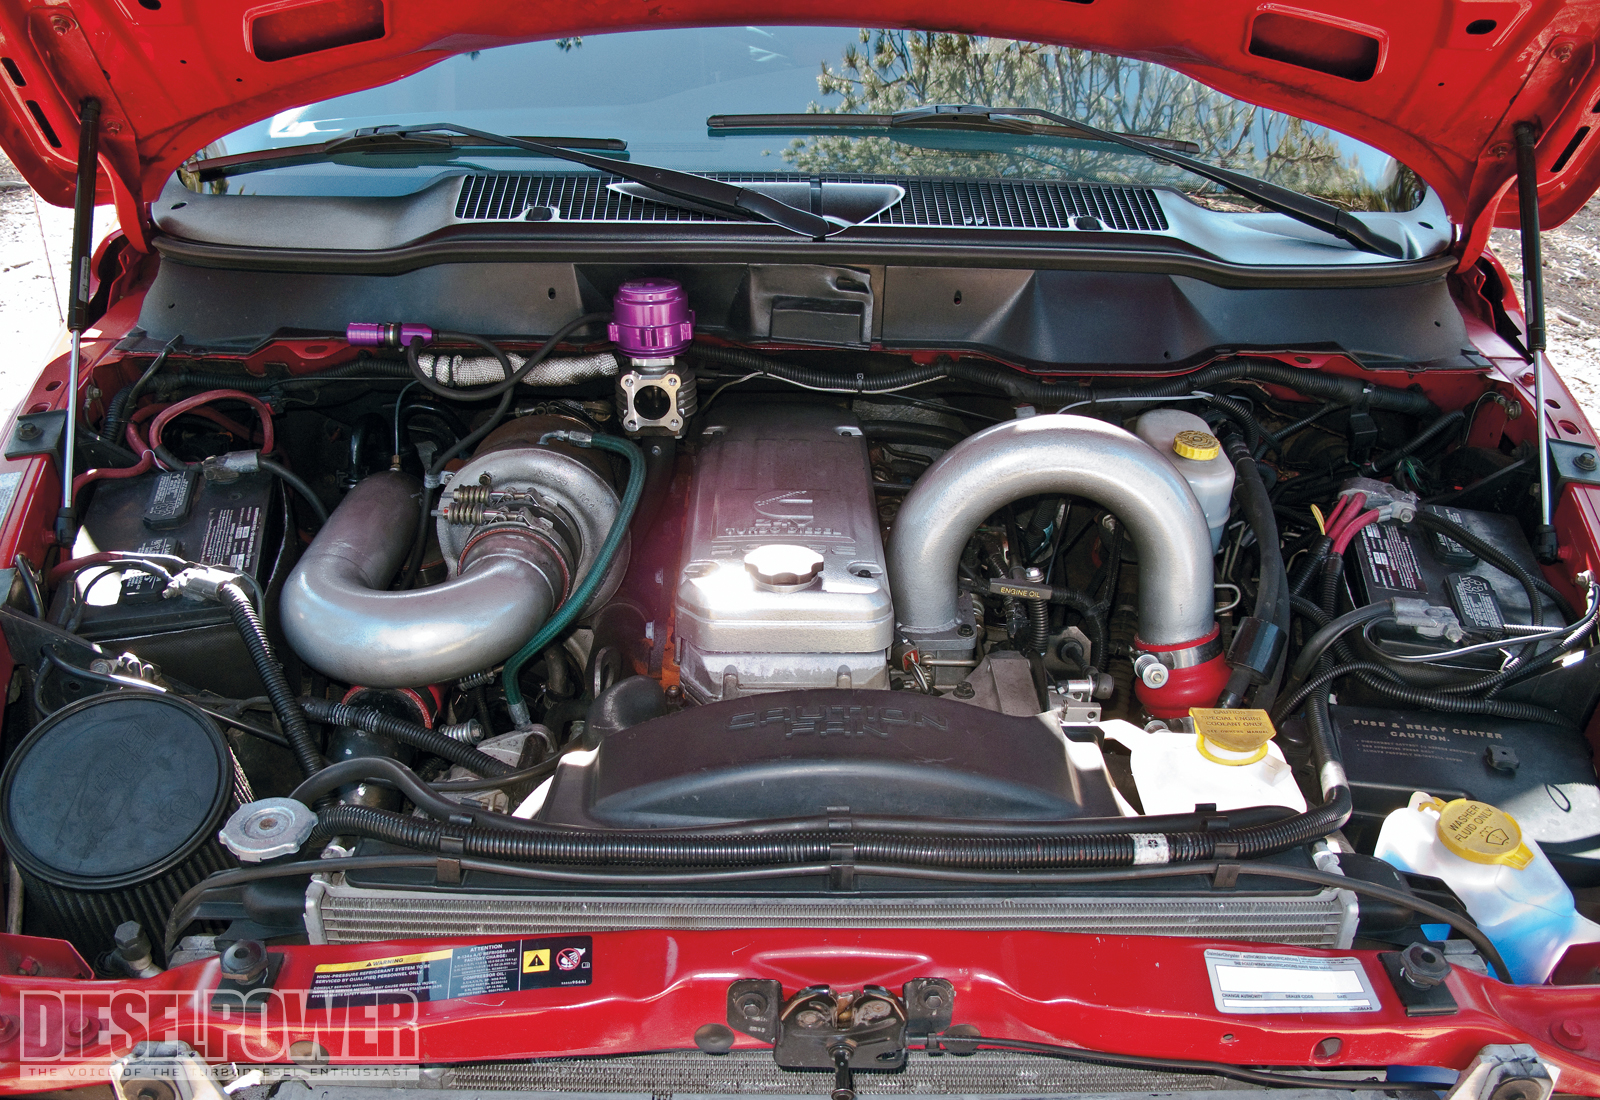 2004 Dodge Ram 2500 Diesel Performanceï½œmamuwy34-°'°